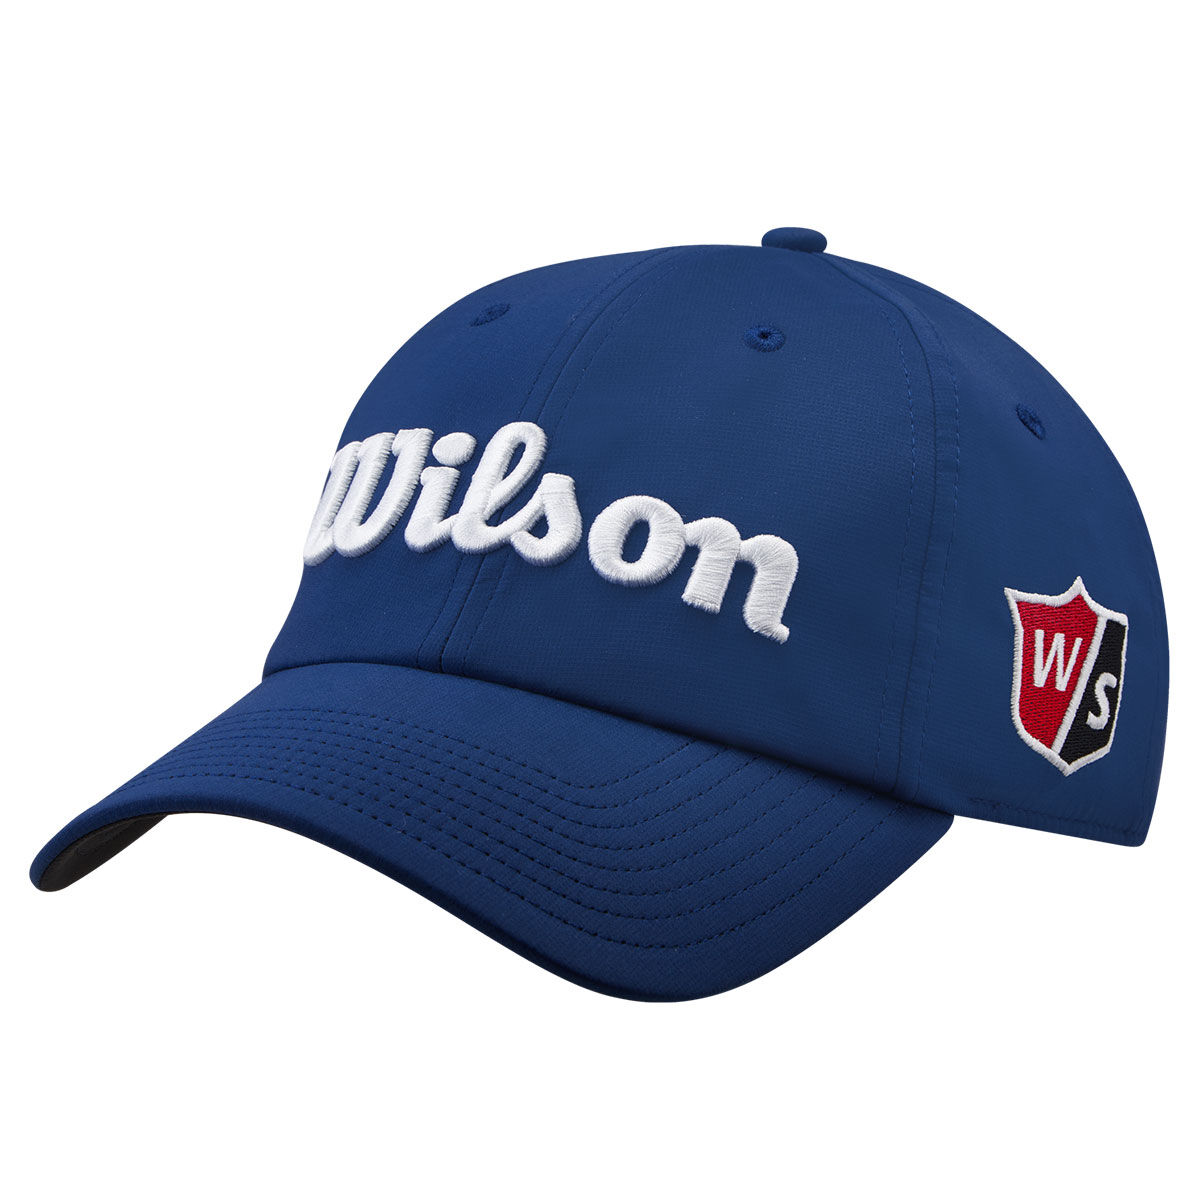 Wilson Men’s Pro Tour Golf Cap, Mens, Navy/white, One size | American Golf